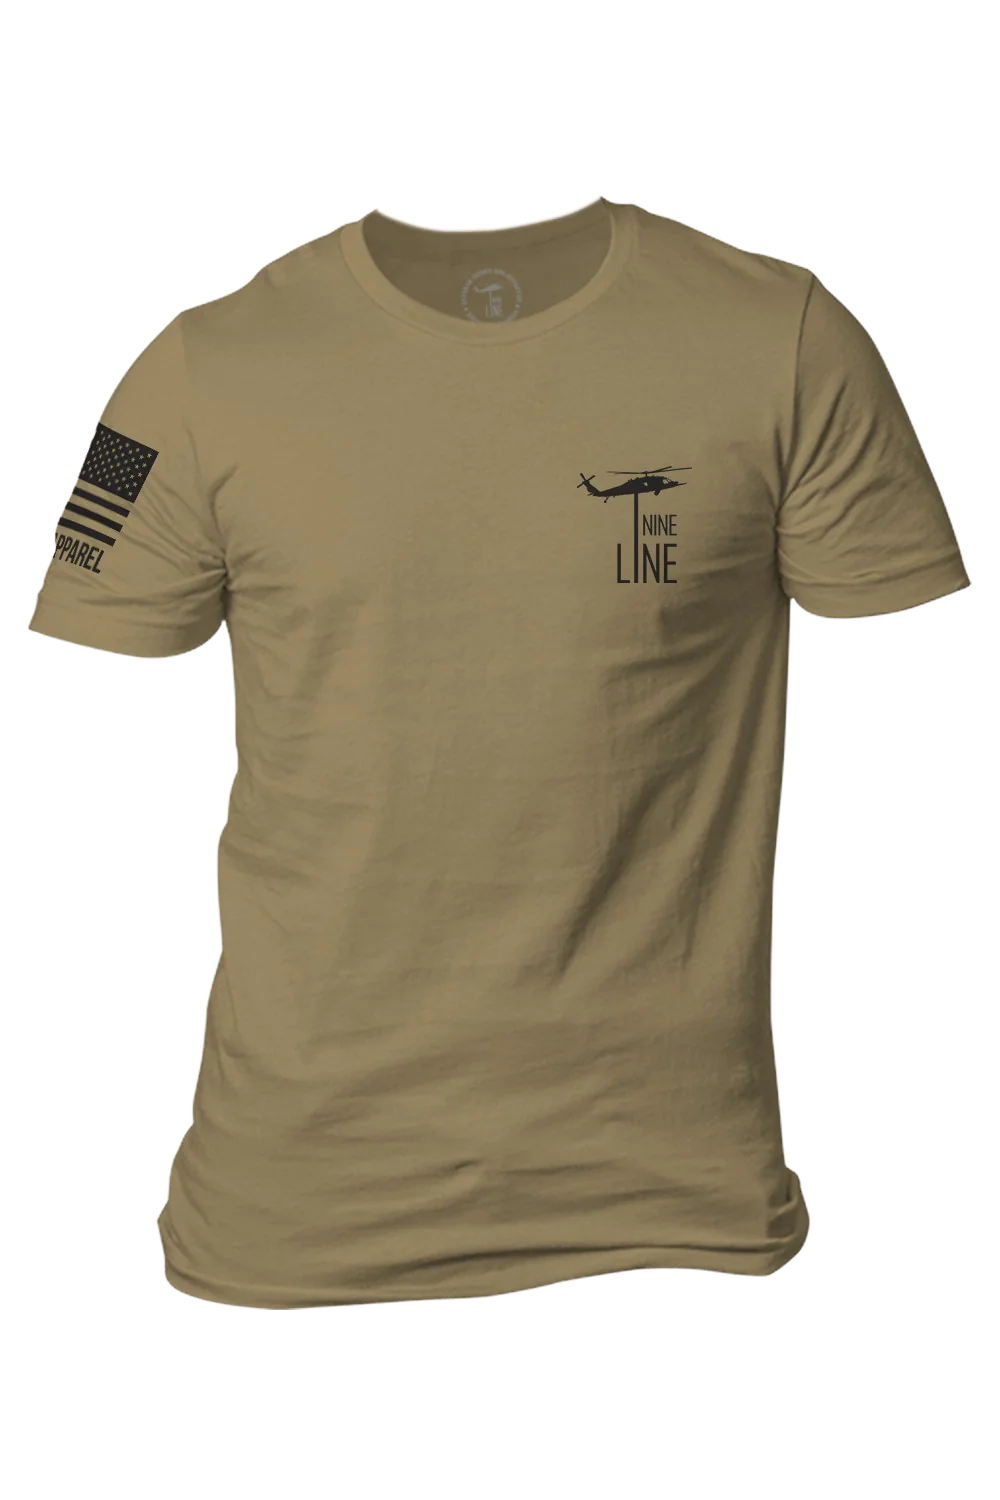 Nine Line T-Shirt - Basic Tee - Nine Line Drop posted by ProdOrigin USA in Men's Apparel